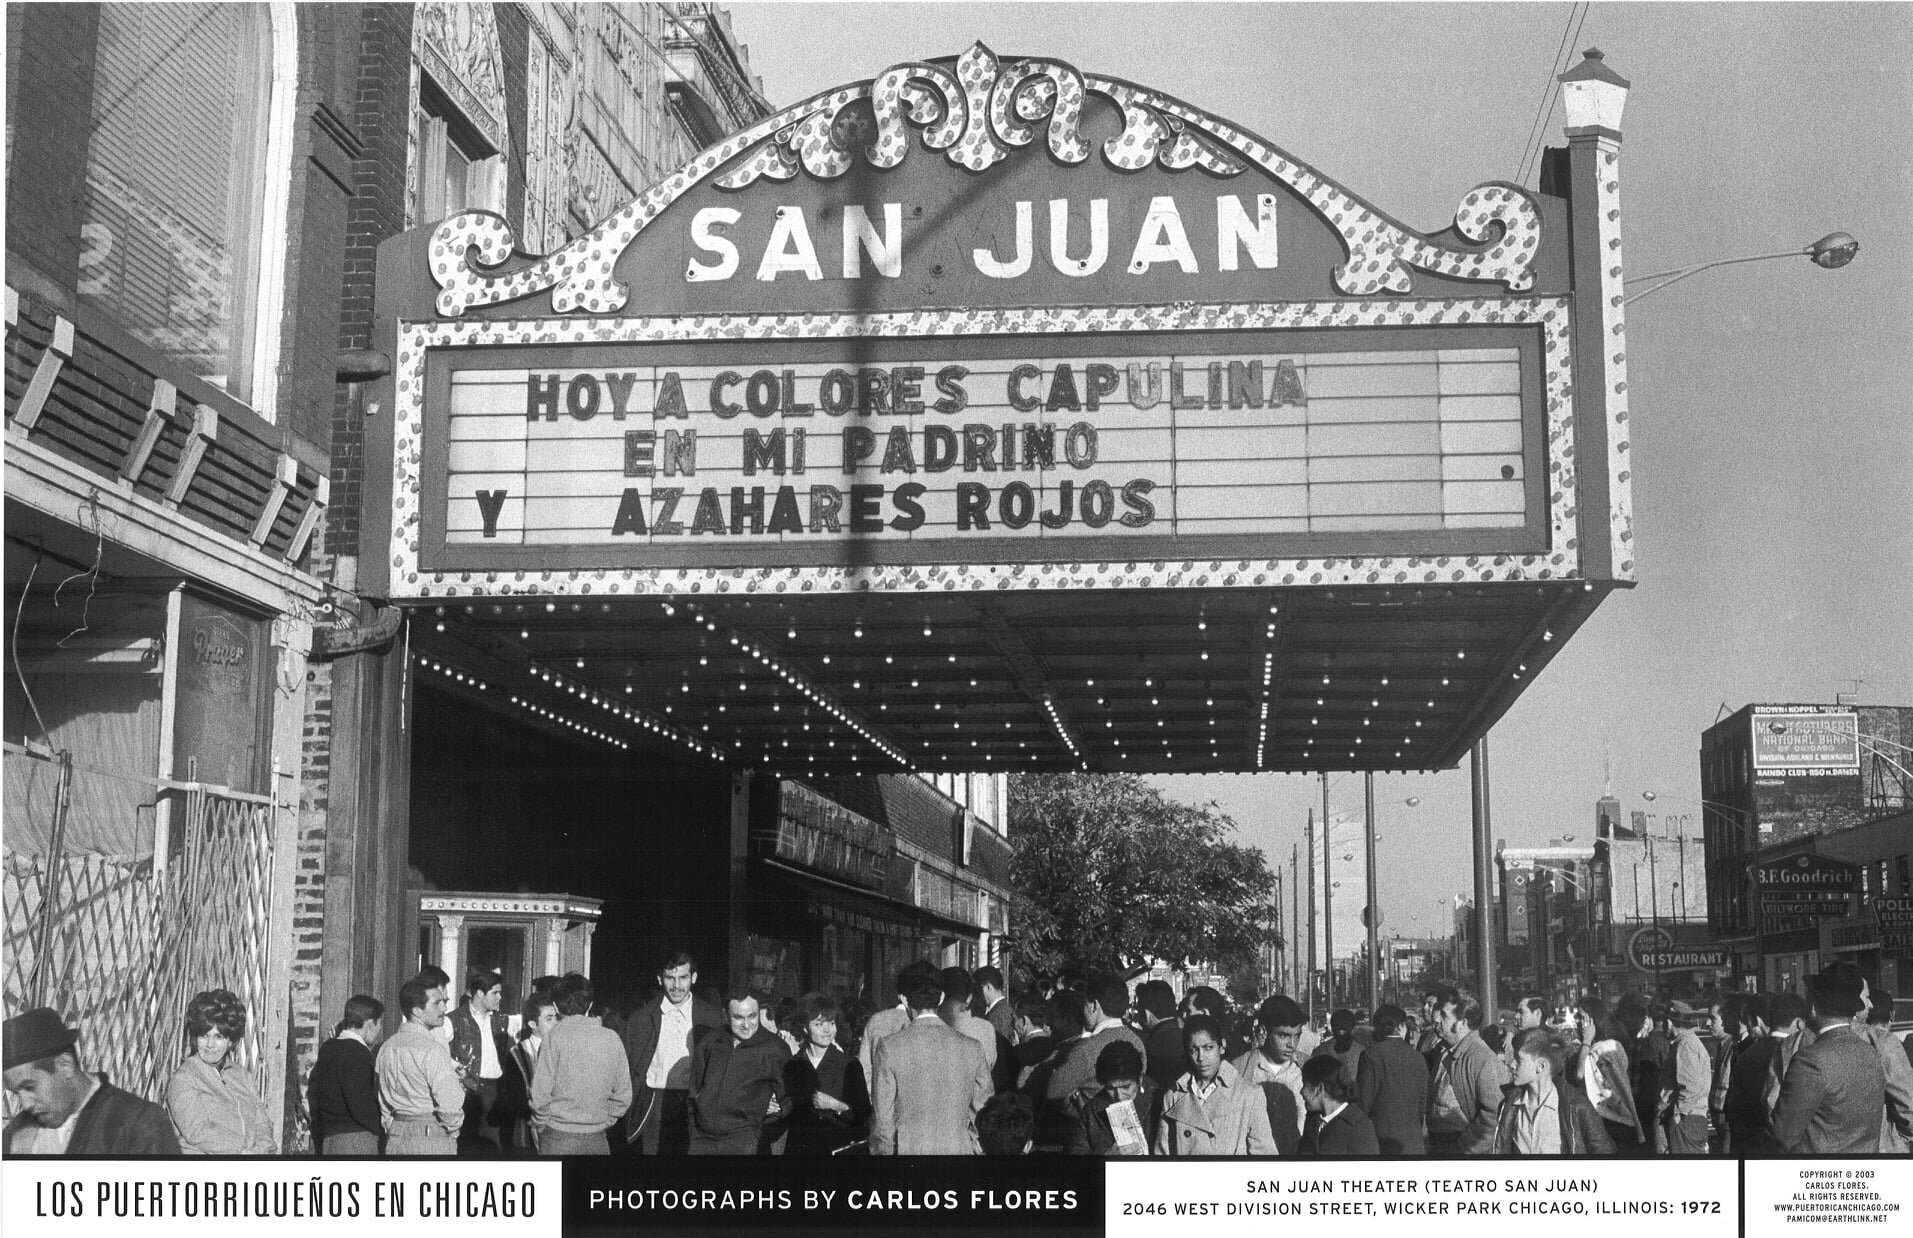  Poster # 2 - “Teatro San Juan” (1972)  